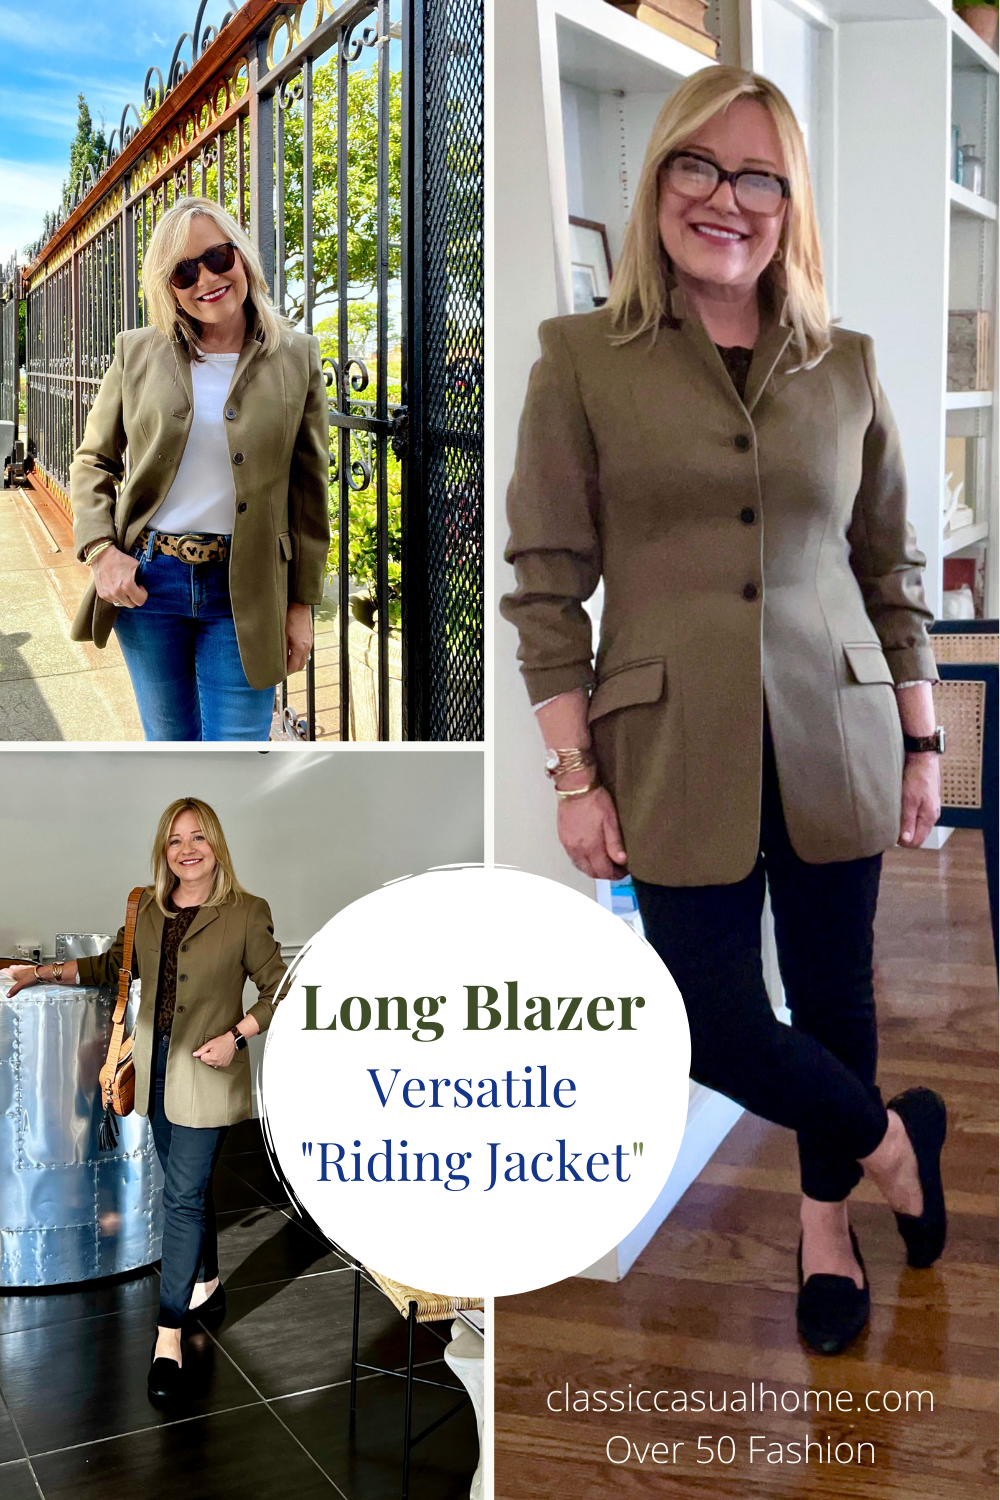 Riding jacket fashion over 50
long blazer